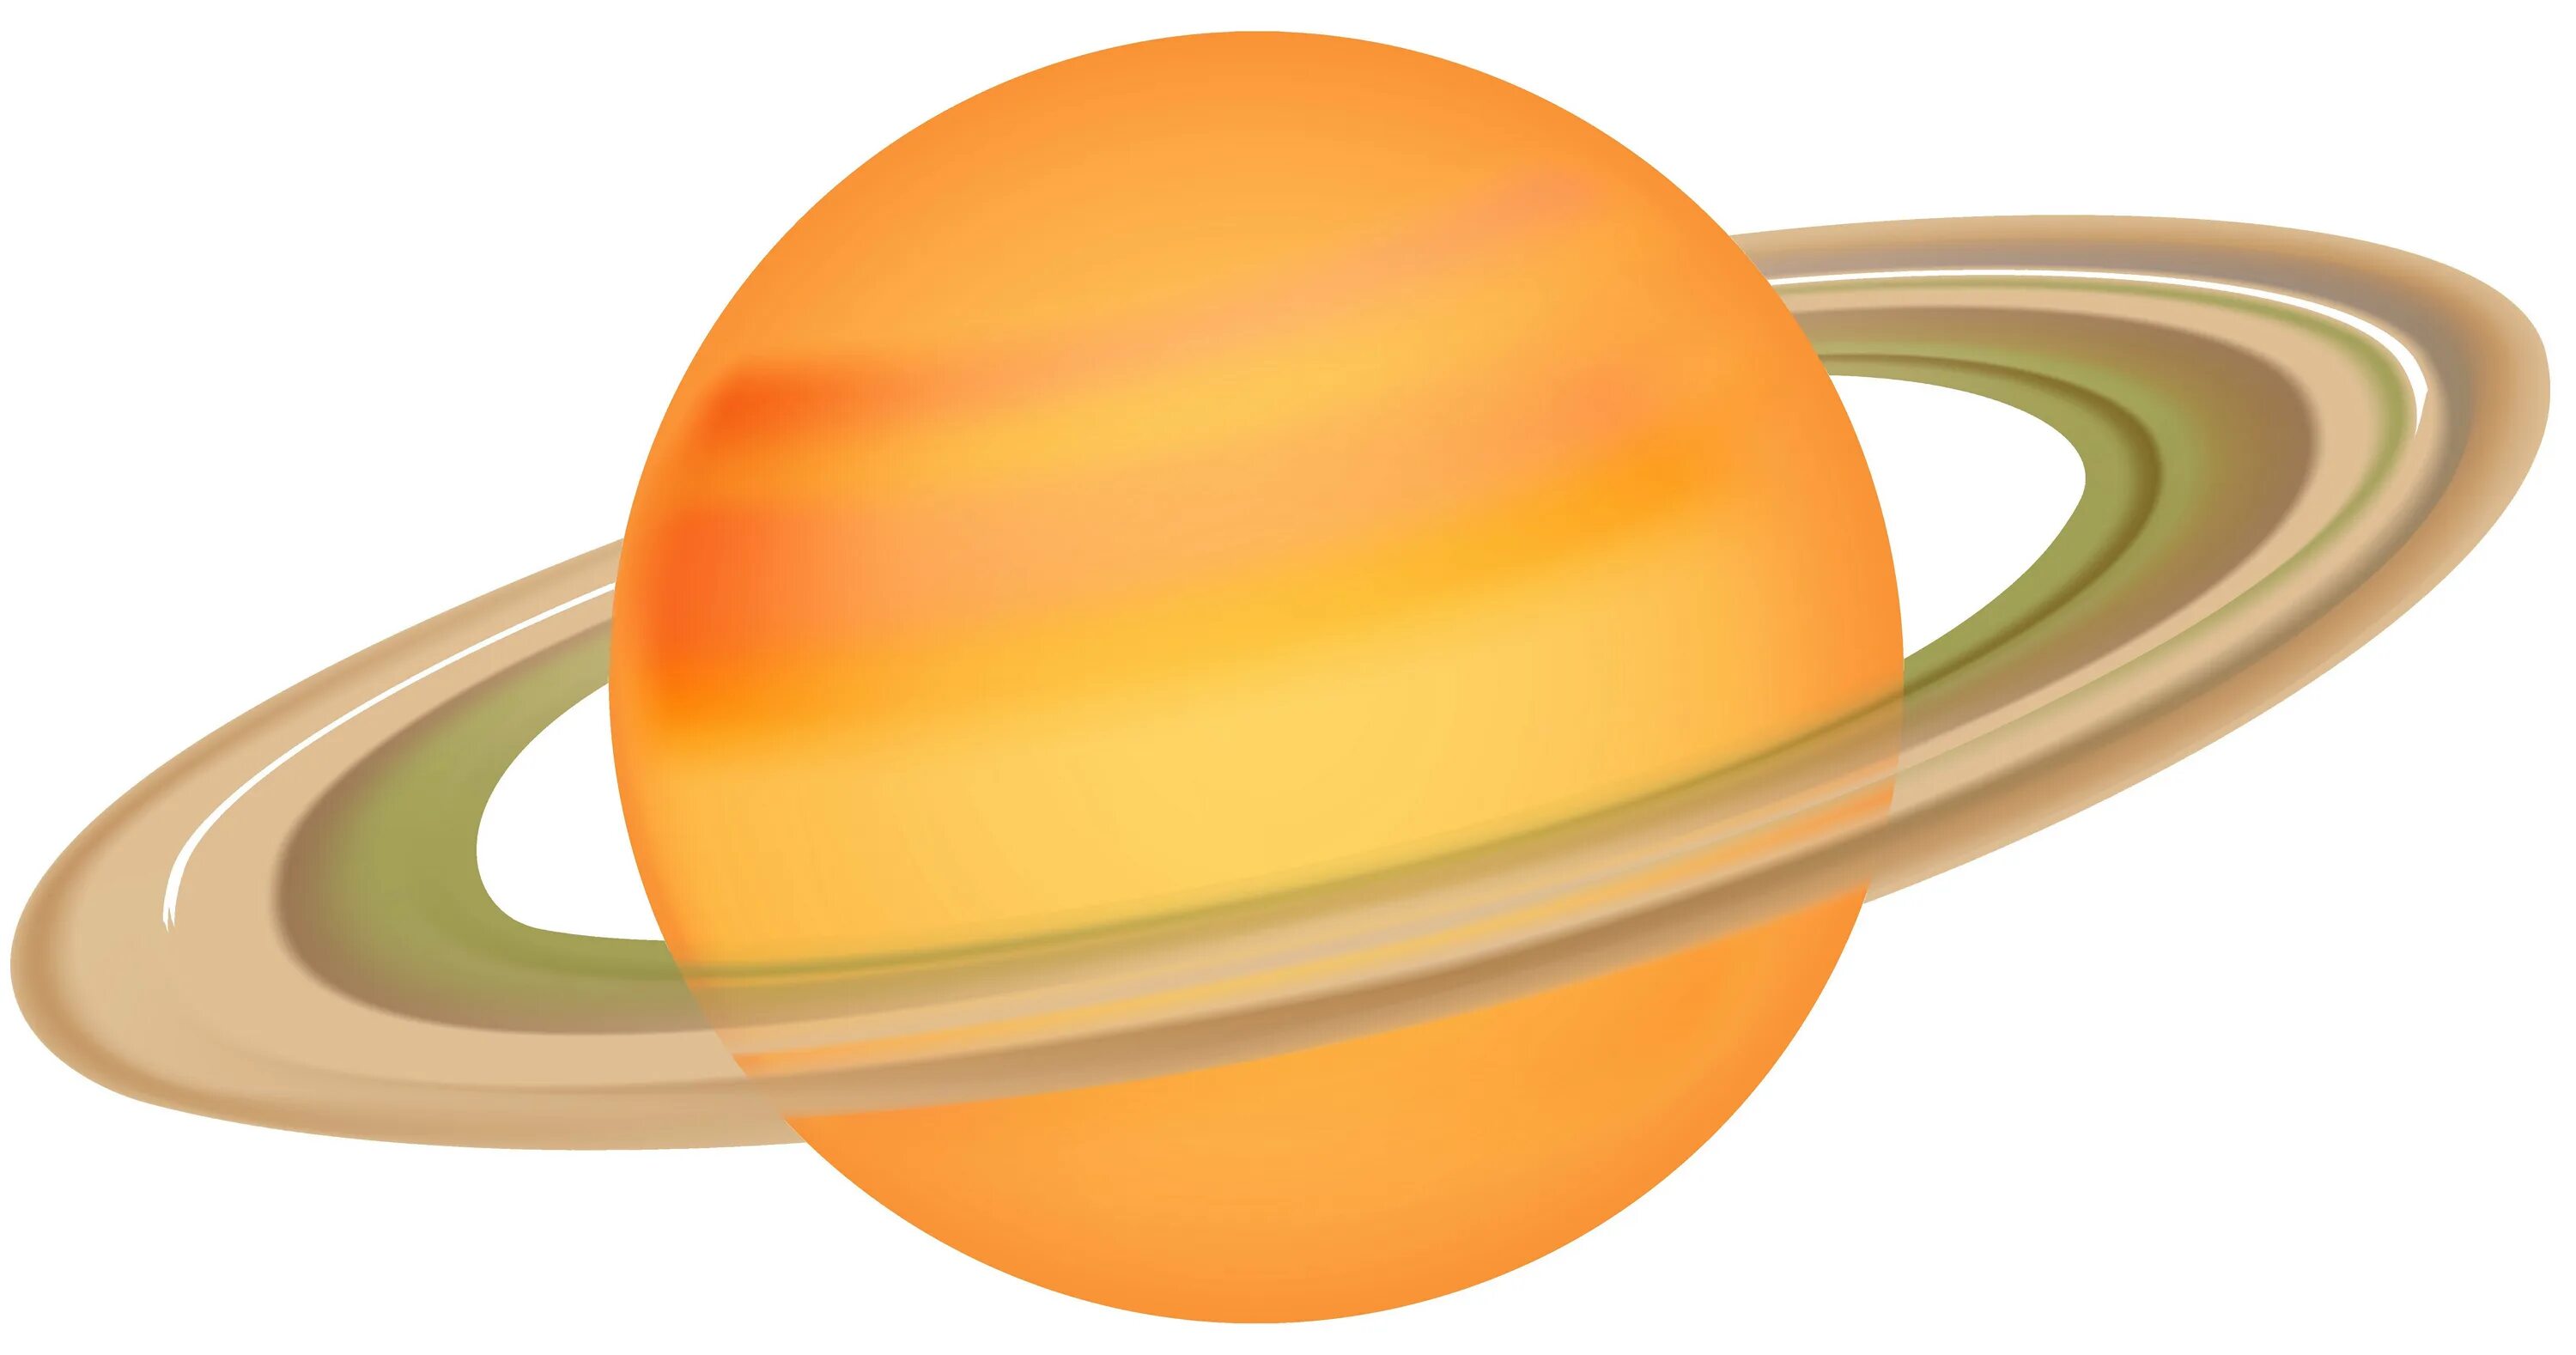 Планета сатурн картинка для детей. Сатурн (Планета). Сатурн Планета солнечной системы на белом фоне. Сатурн Планета солнечной системы для детей. Планета без фона.